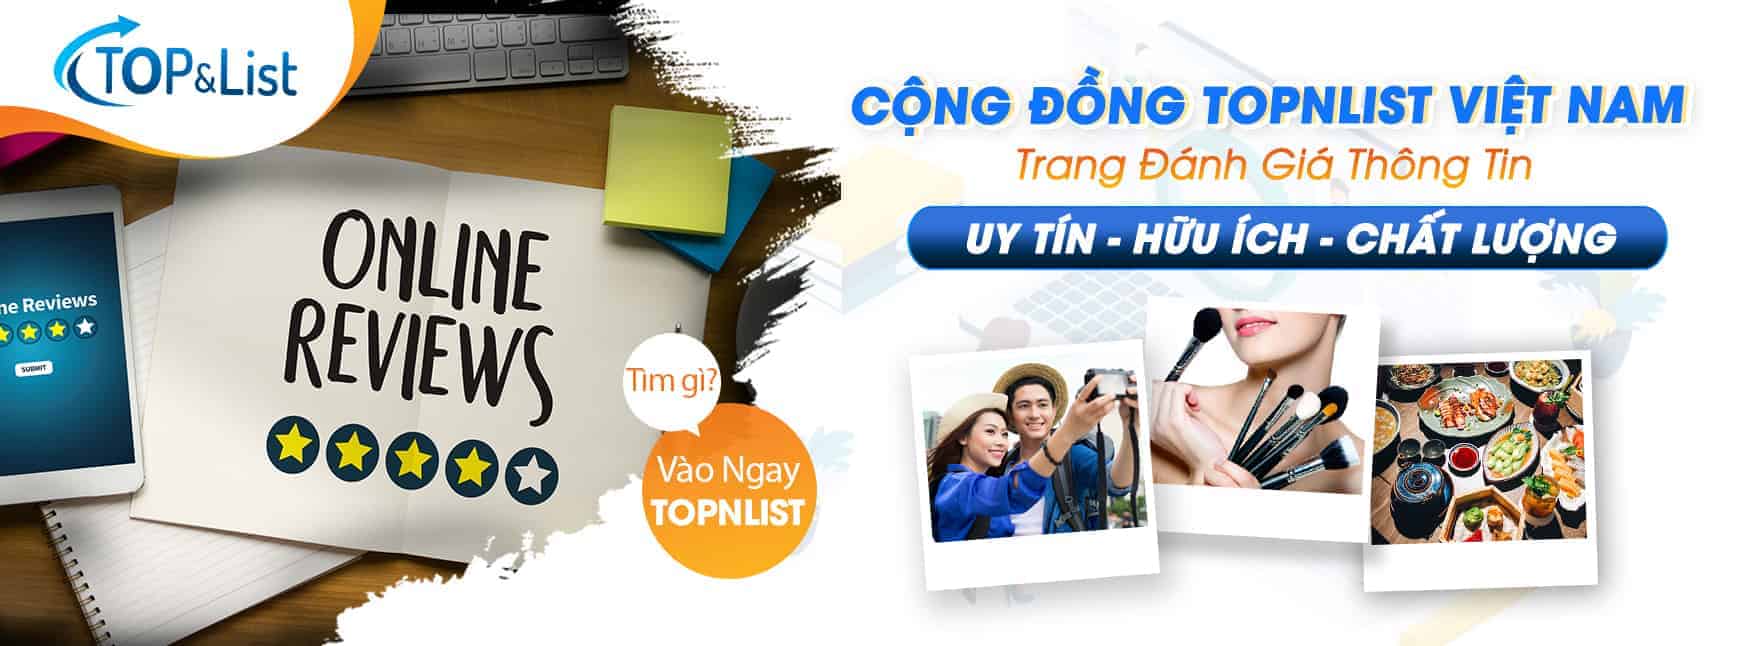 Vietnam TopnList Community